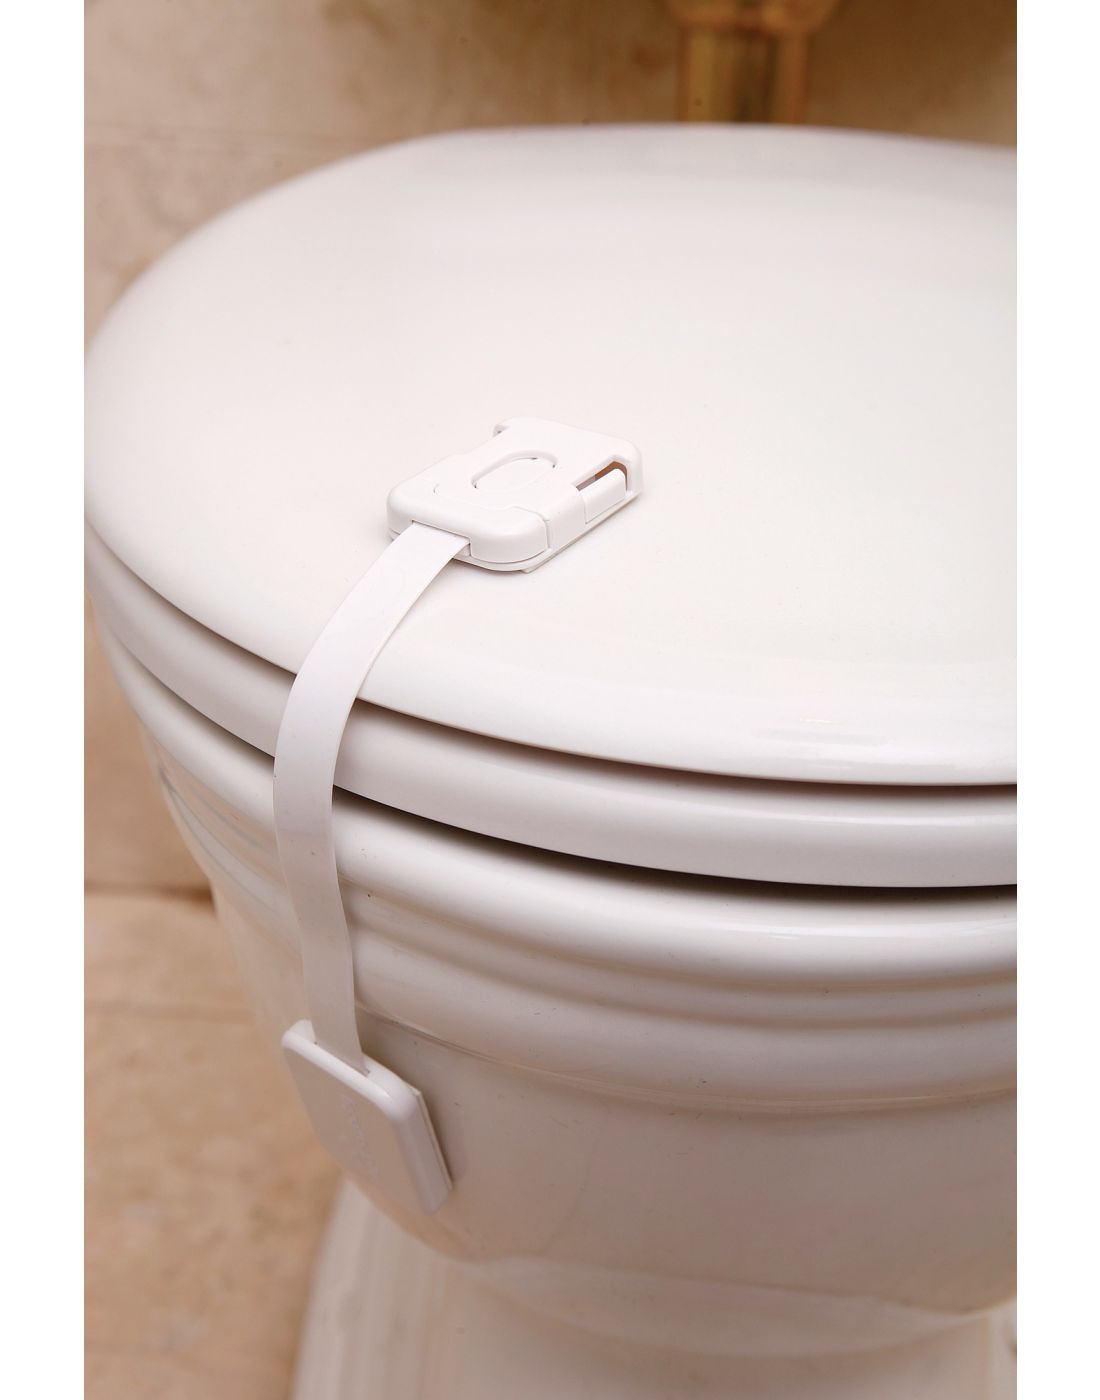 DreamBaby Kids Ezy-Check® Toilet & Appliance Adpta -Lock